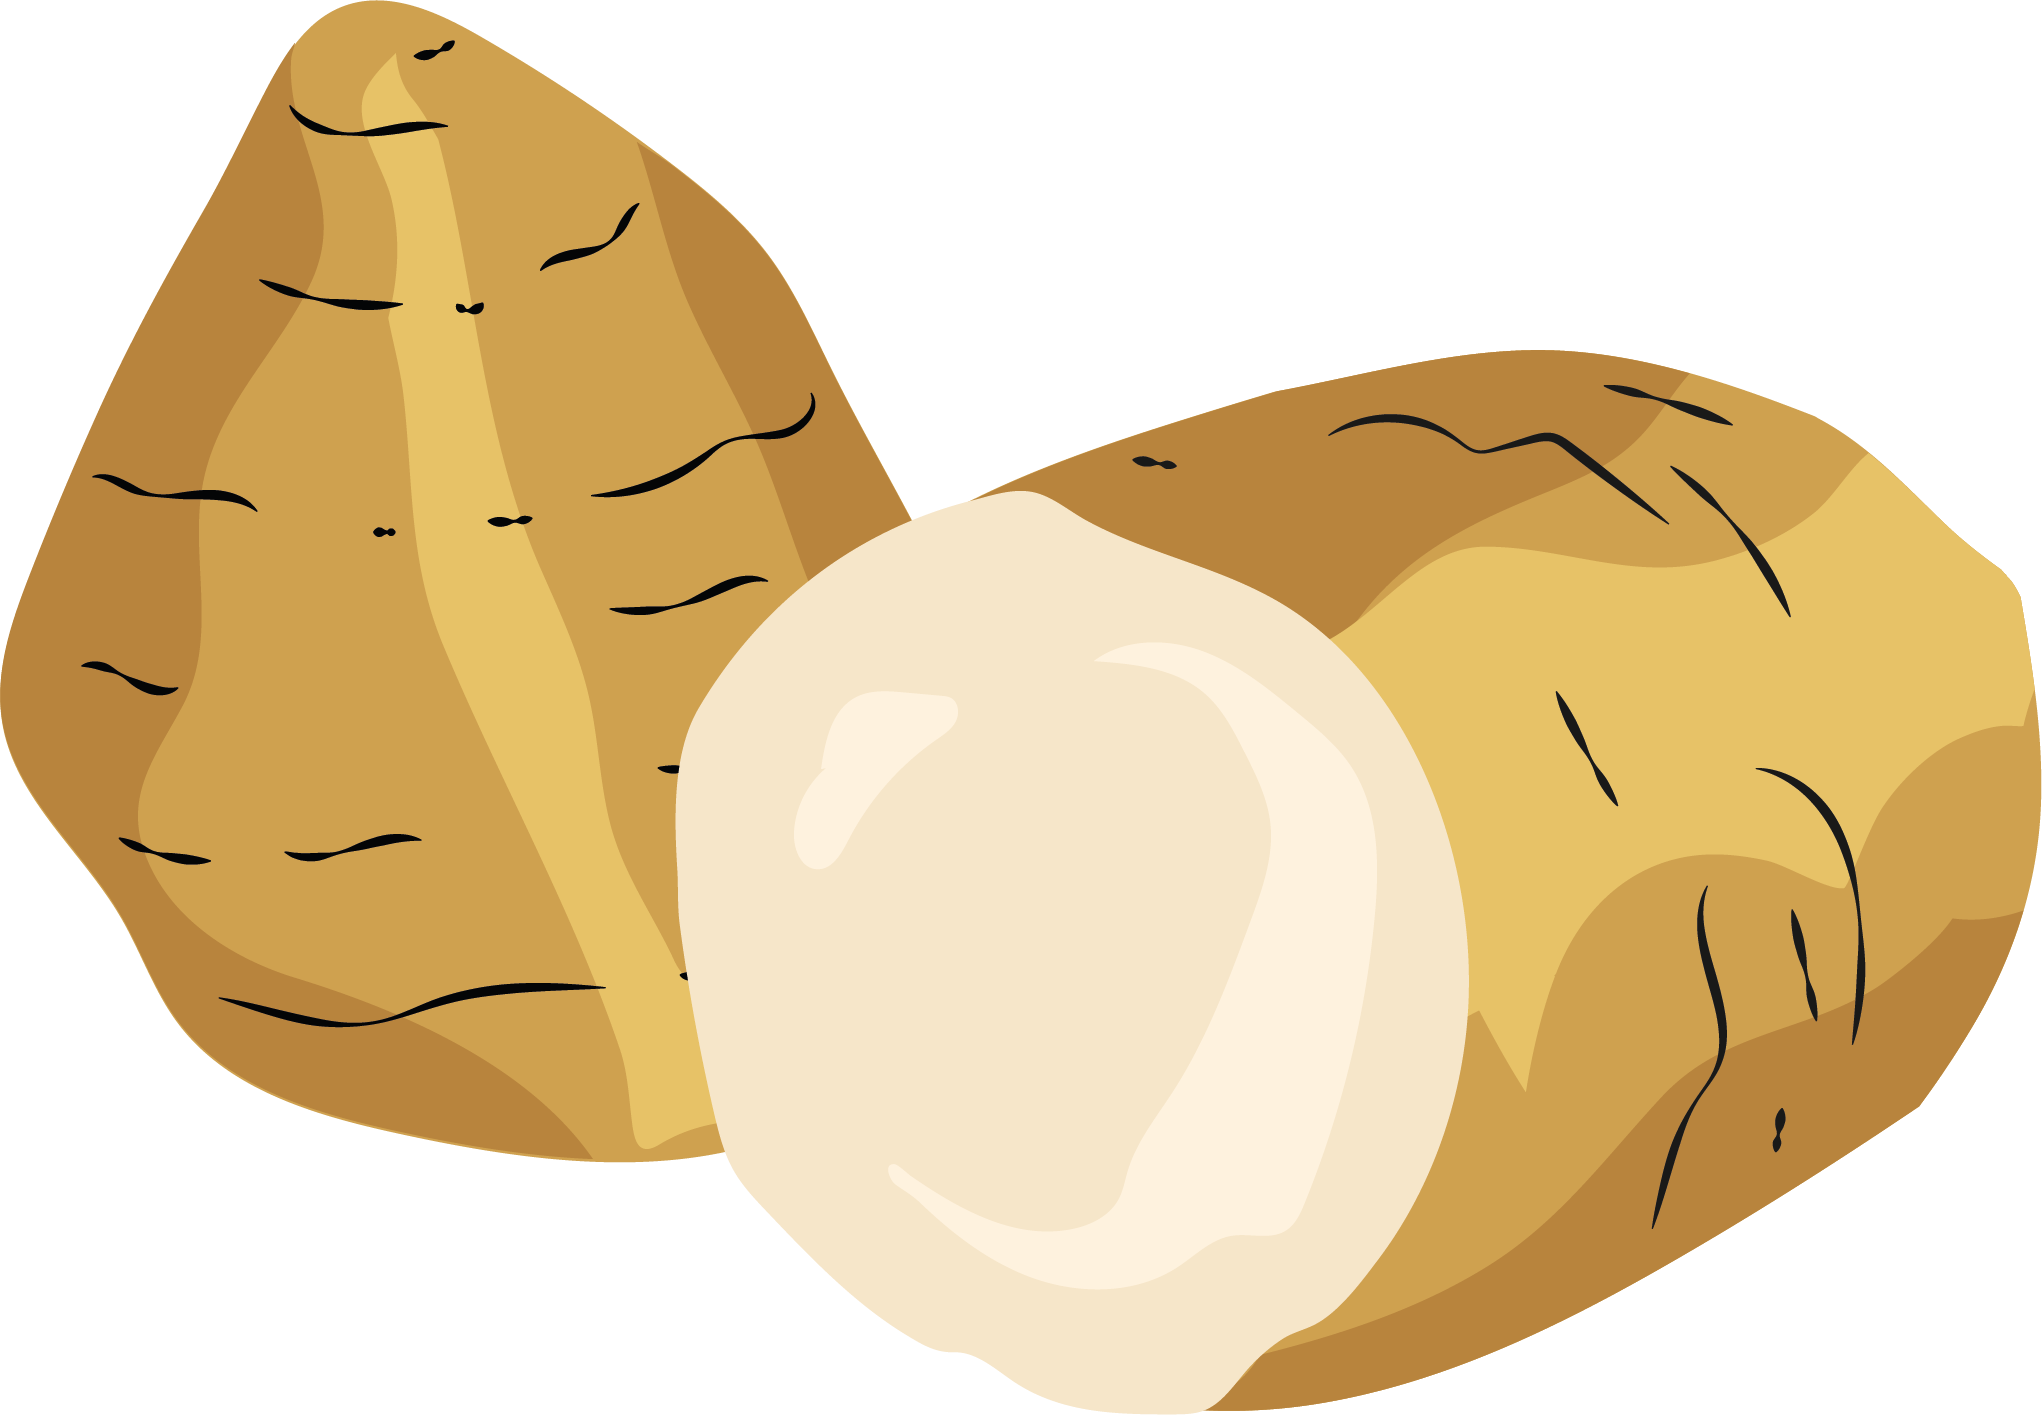 white potato